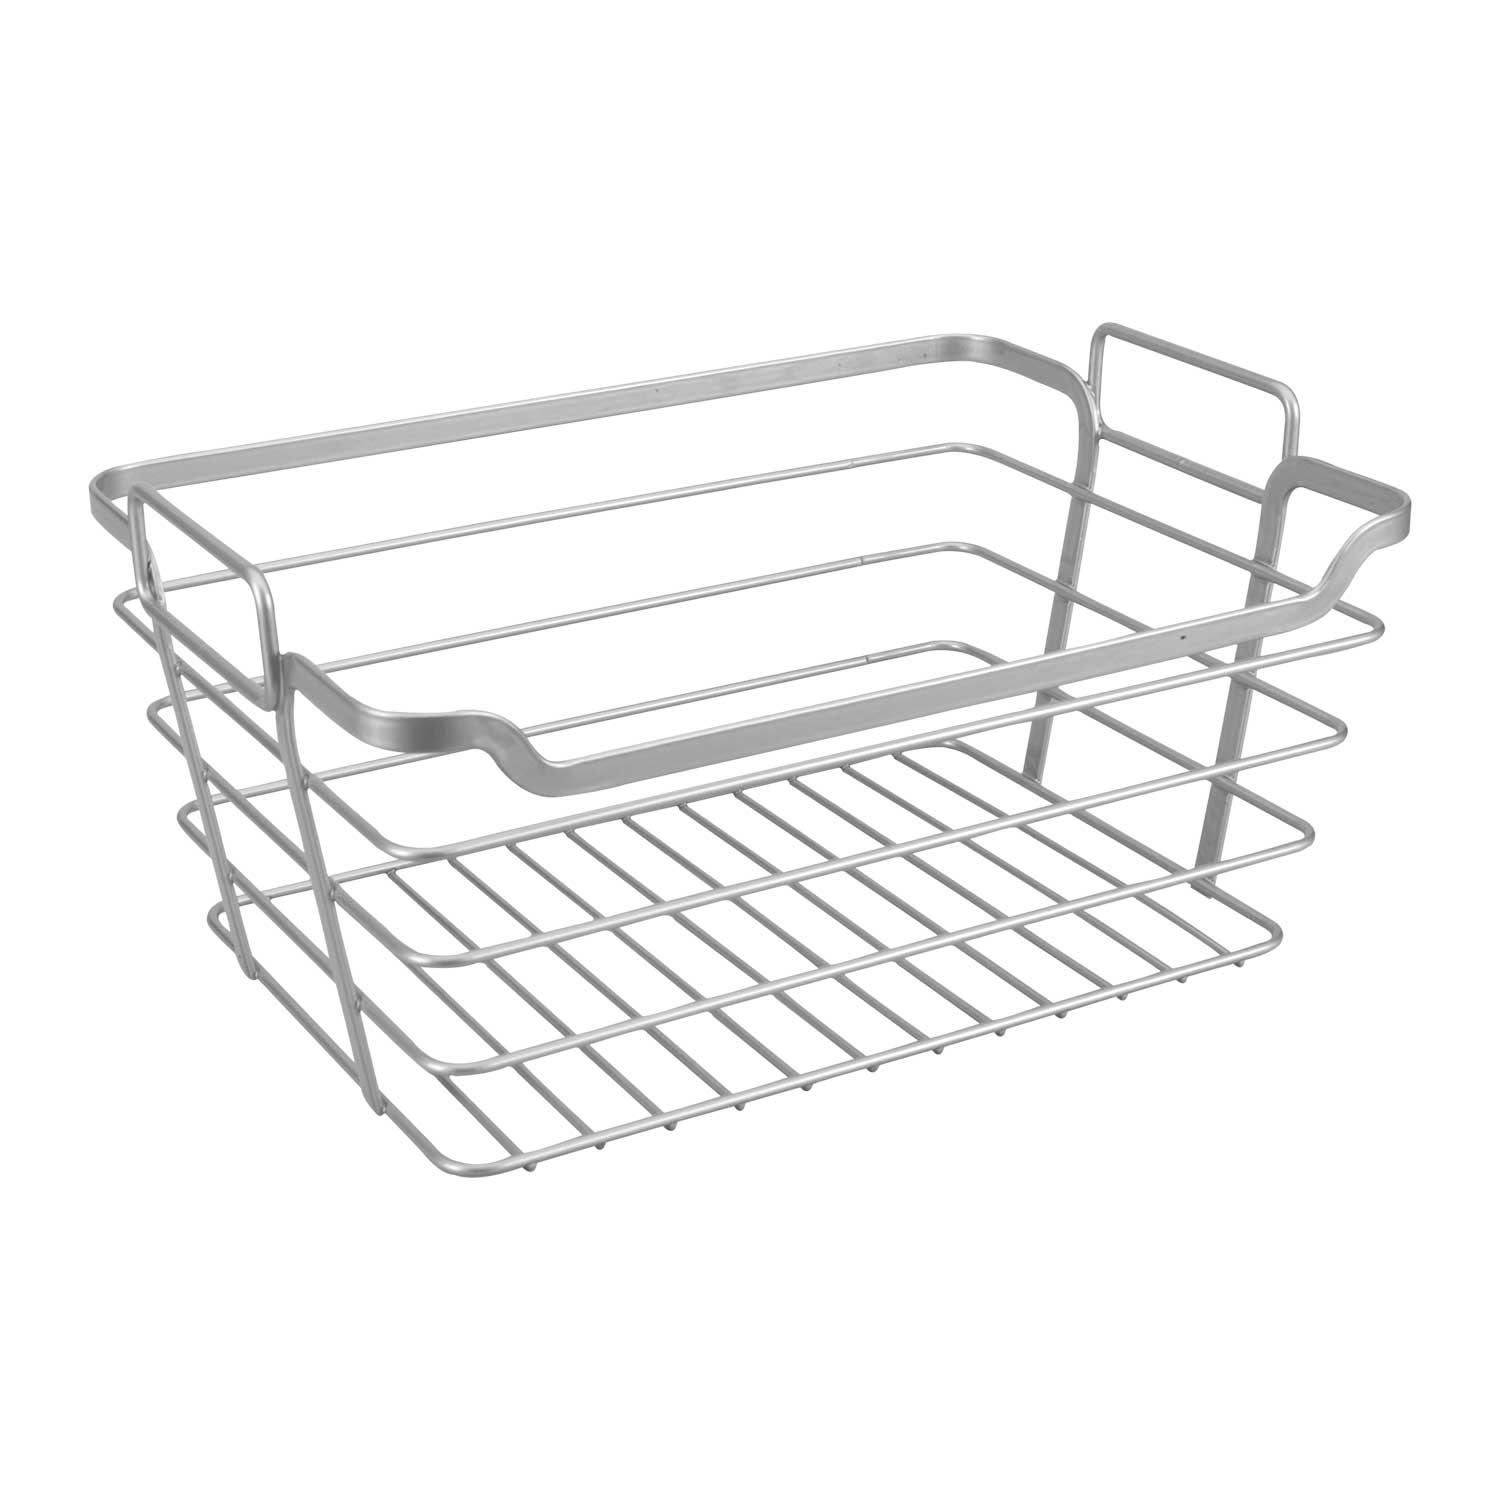 METALTEX Viva Bath storage basket